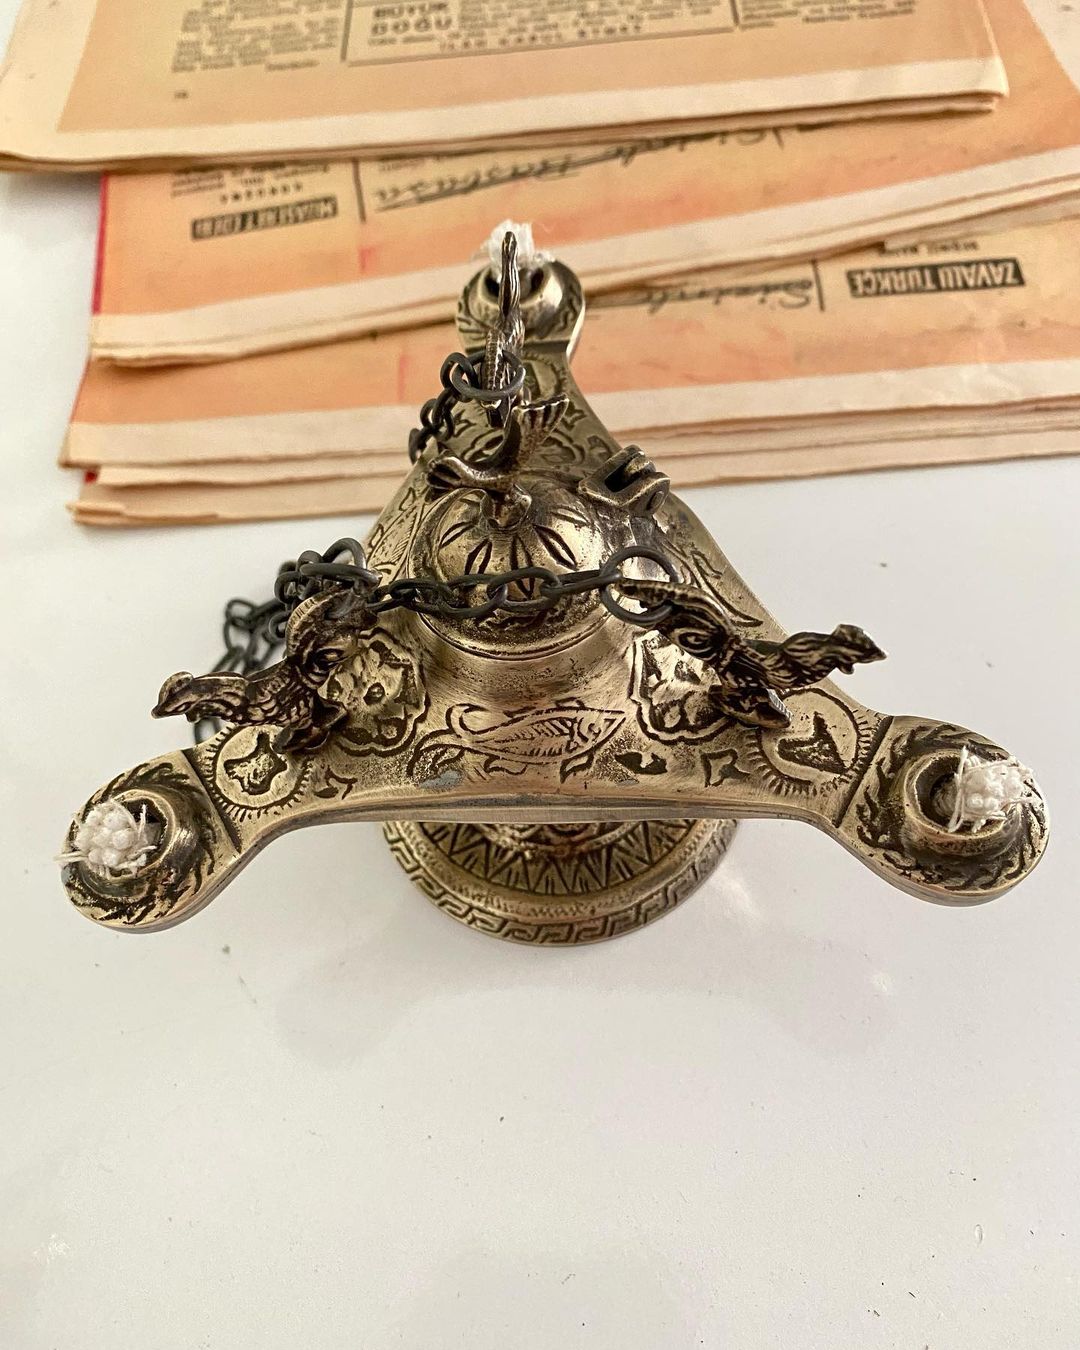 Antique Brass Oil Lamp